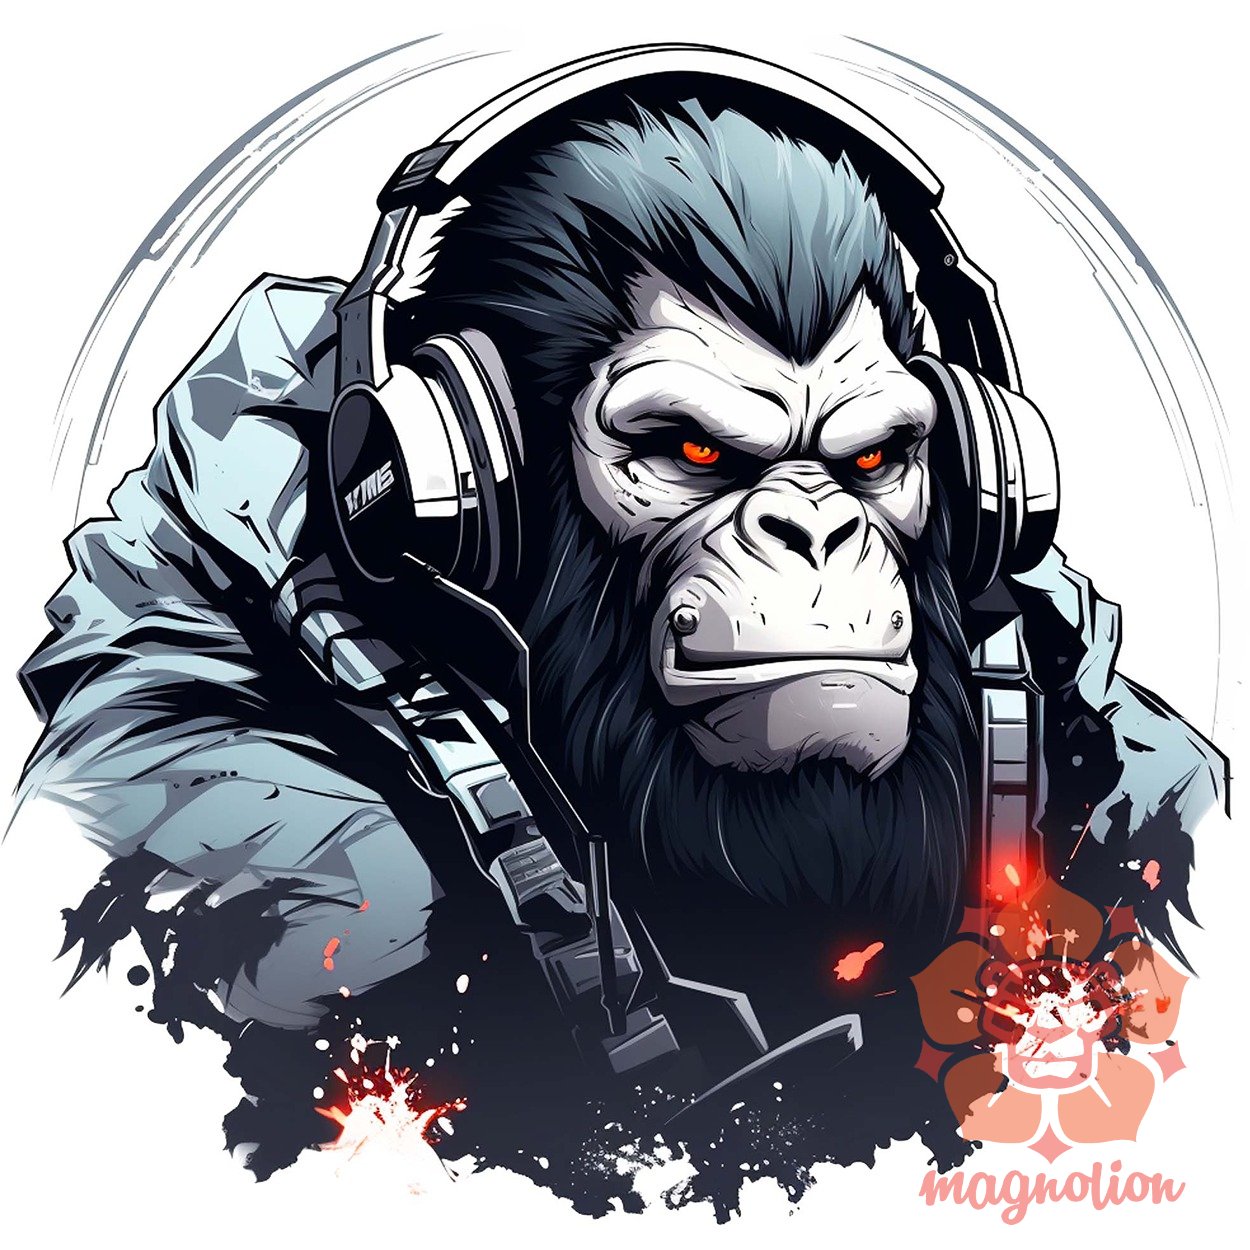 Cyberpunk gorilla v2